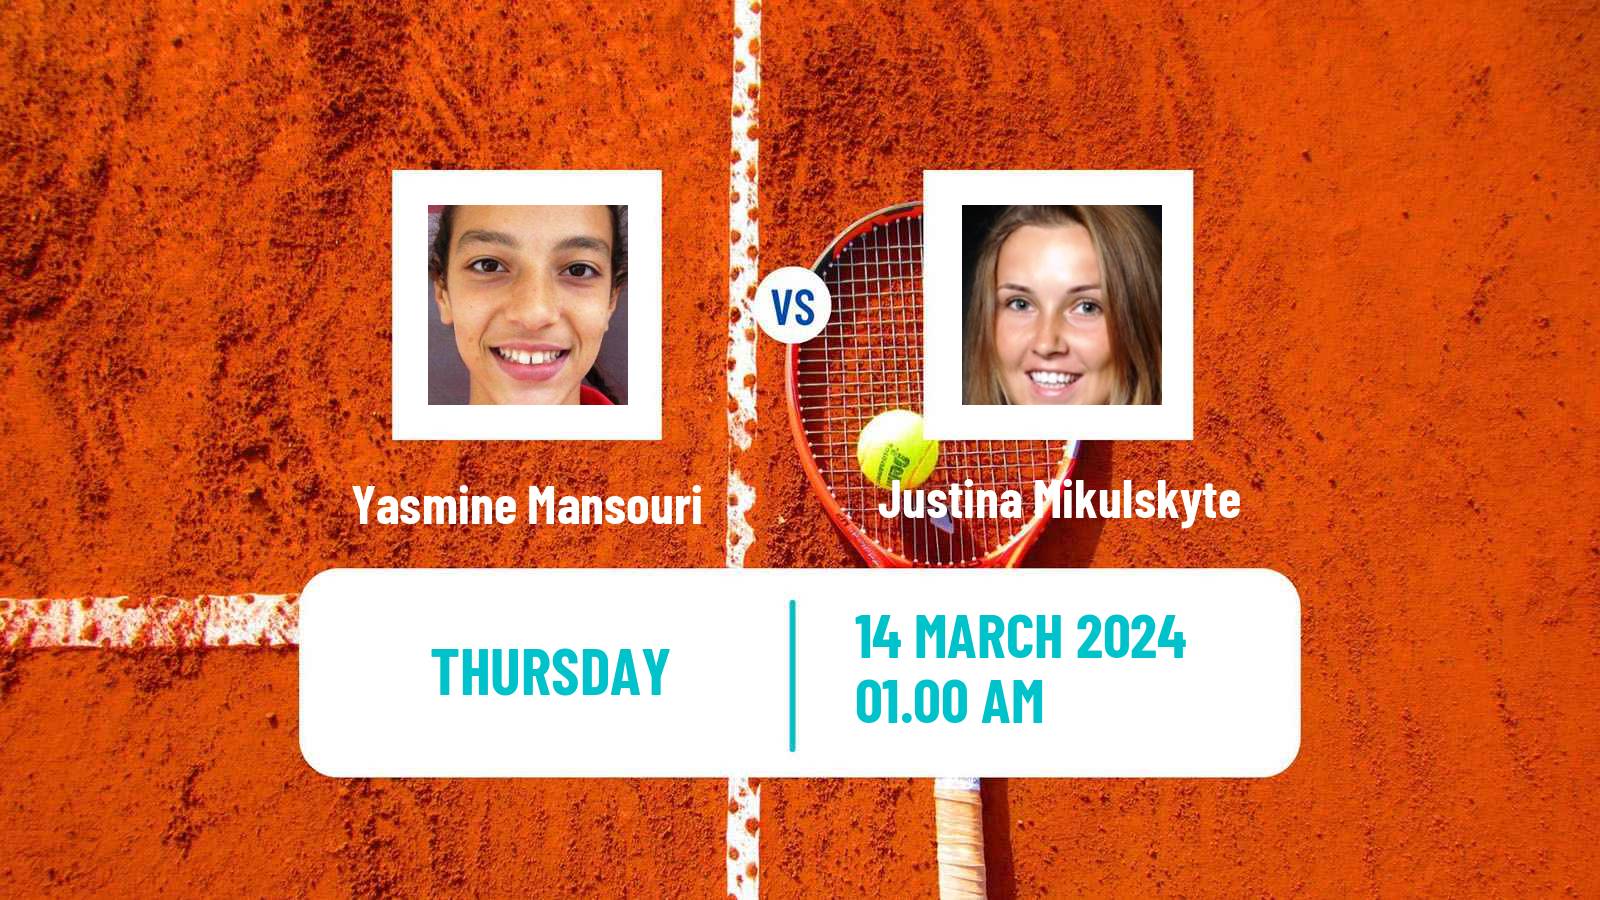 Tennis ITF W35 Indore Women Yasmine Mansouri - Justina Mikulskyte